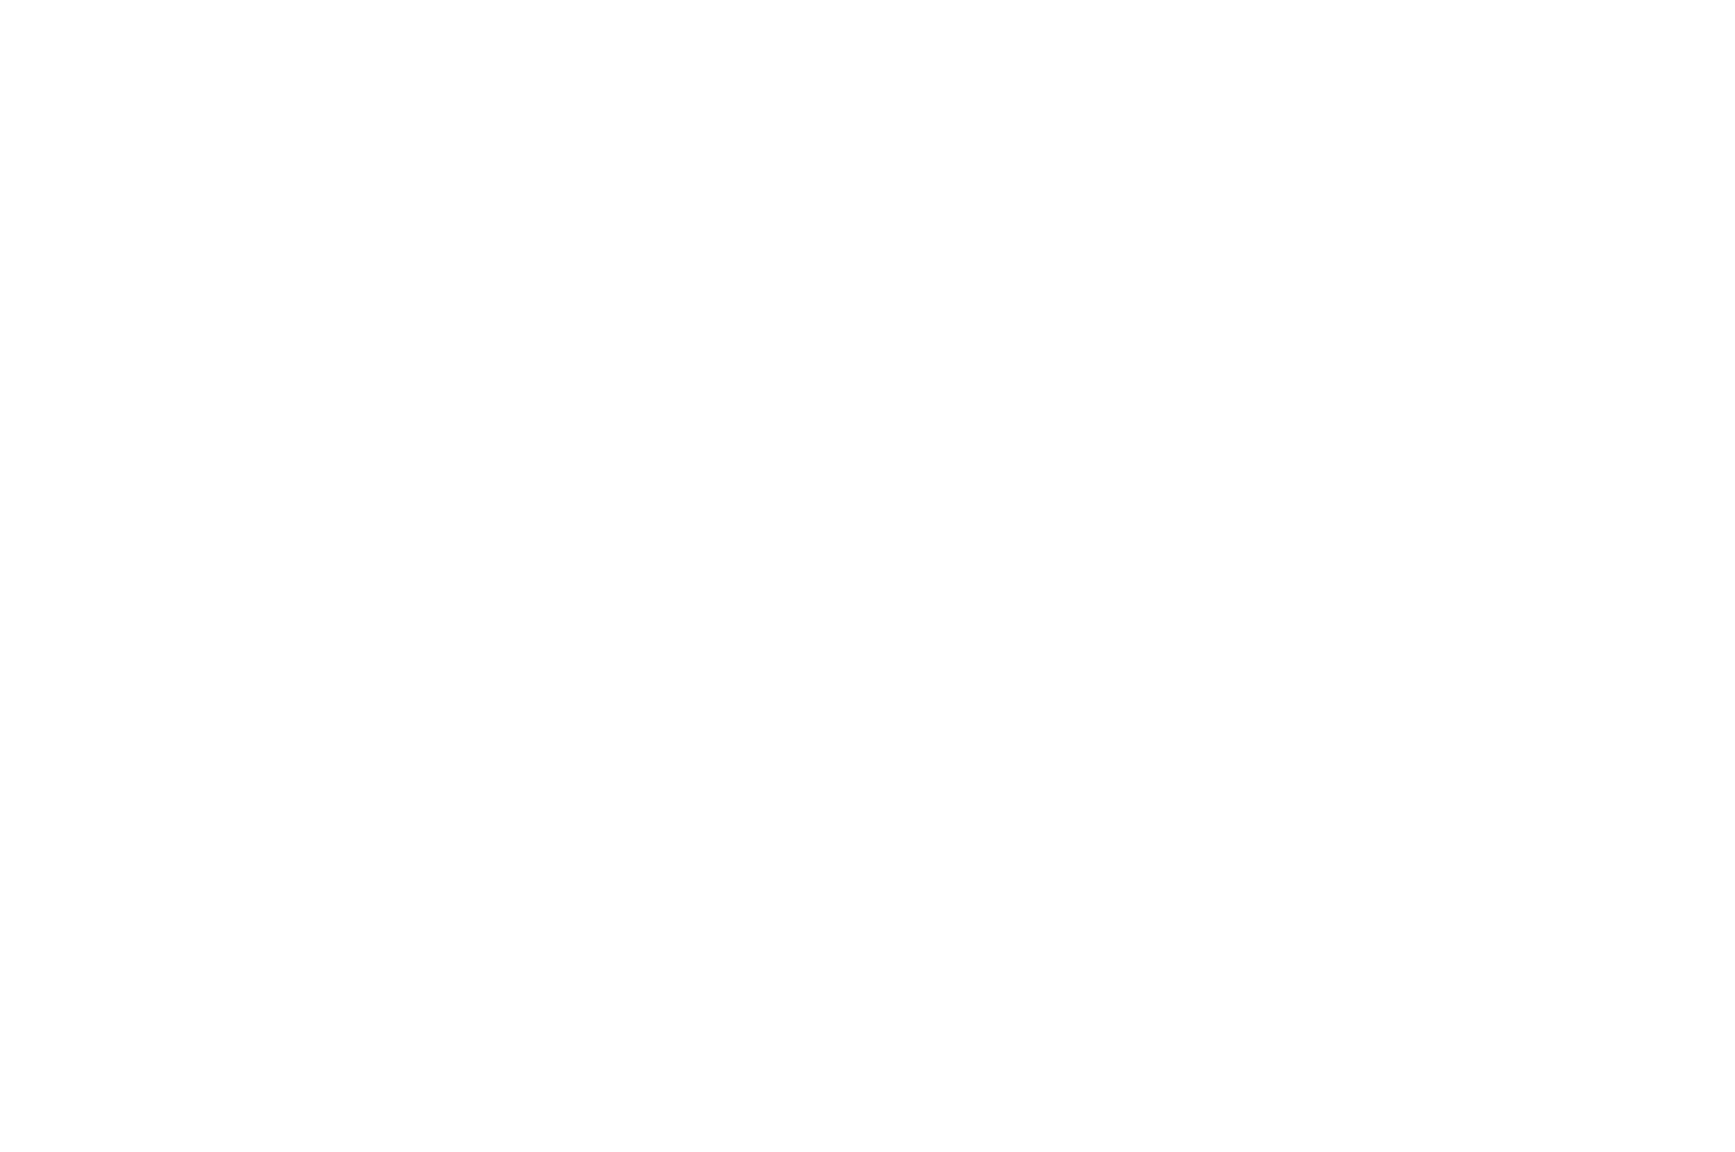 SELECTED-2019-Top-Indie-Film-Awards-MUSIC-1.png